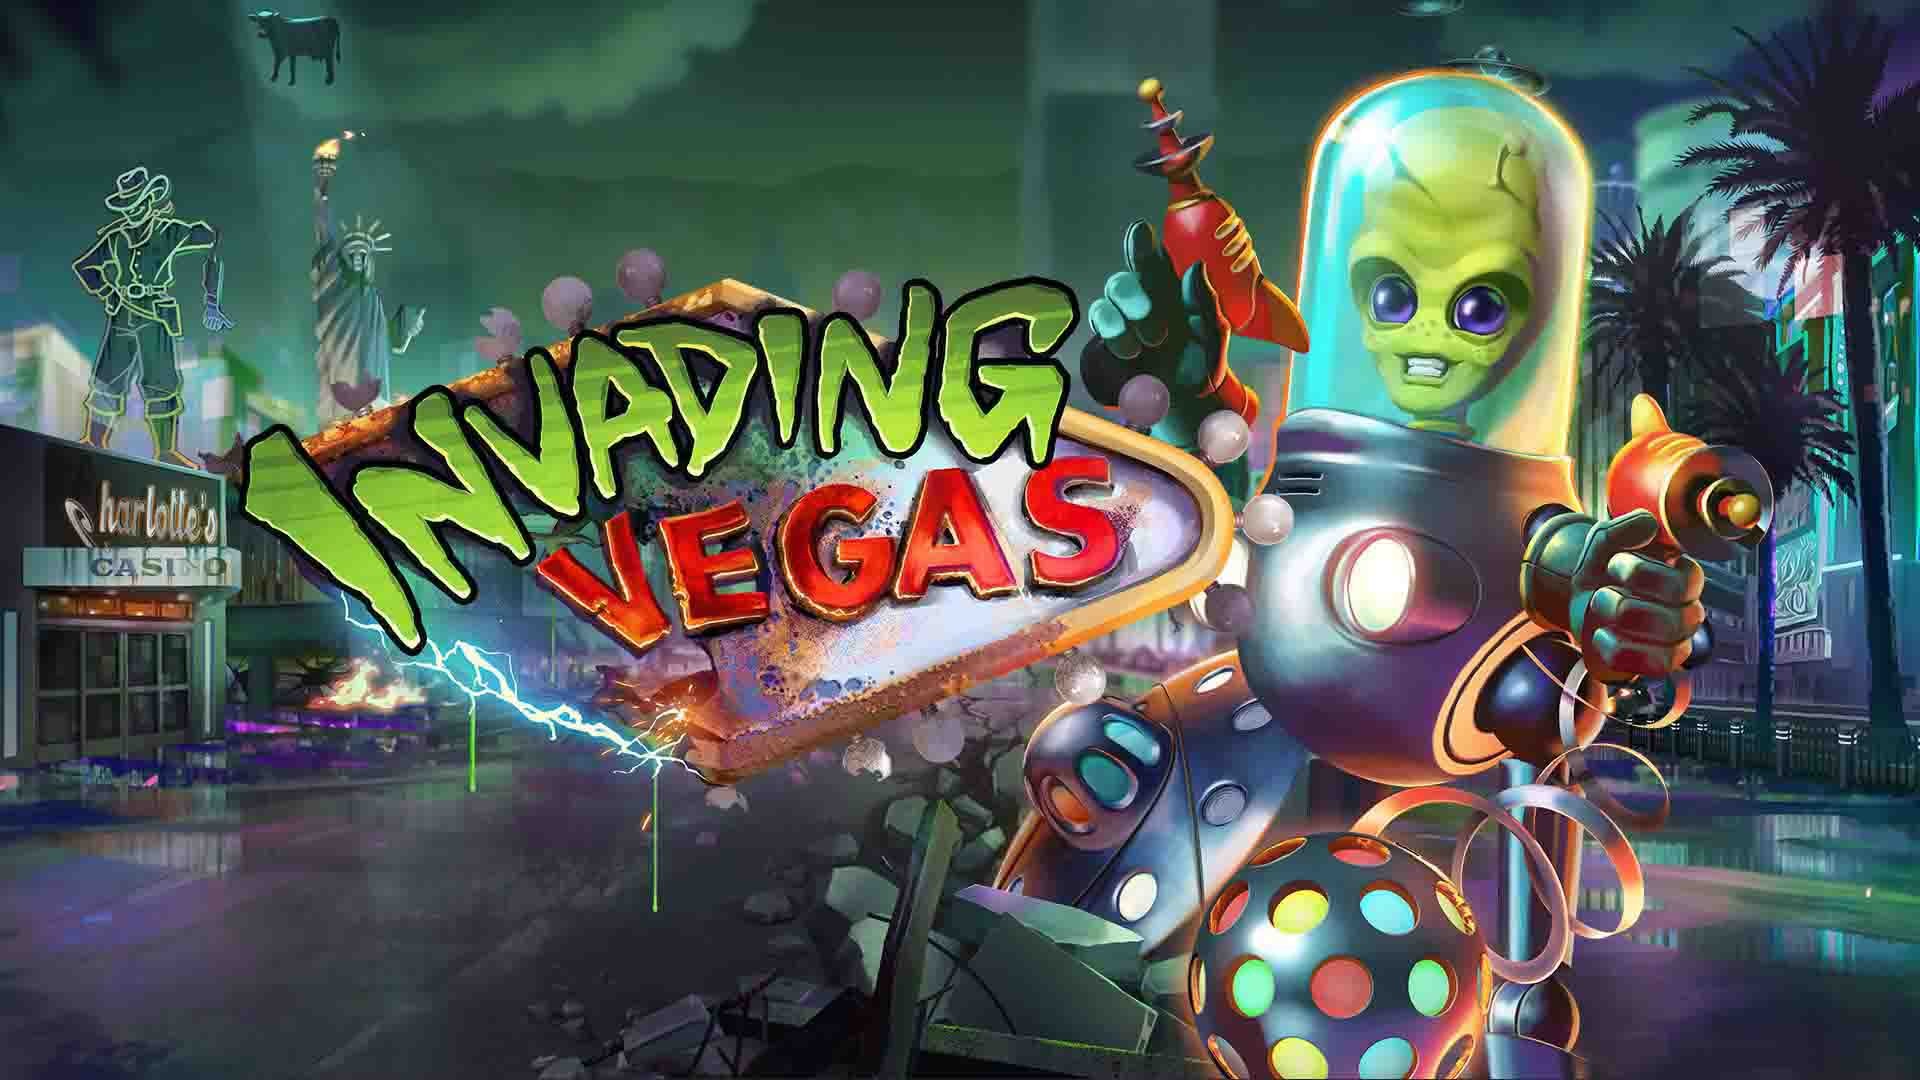 Invading Vegas